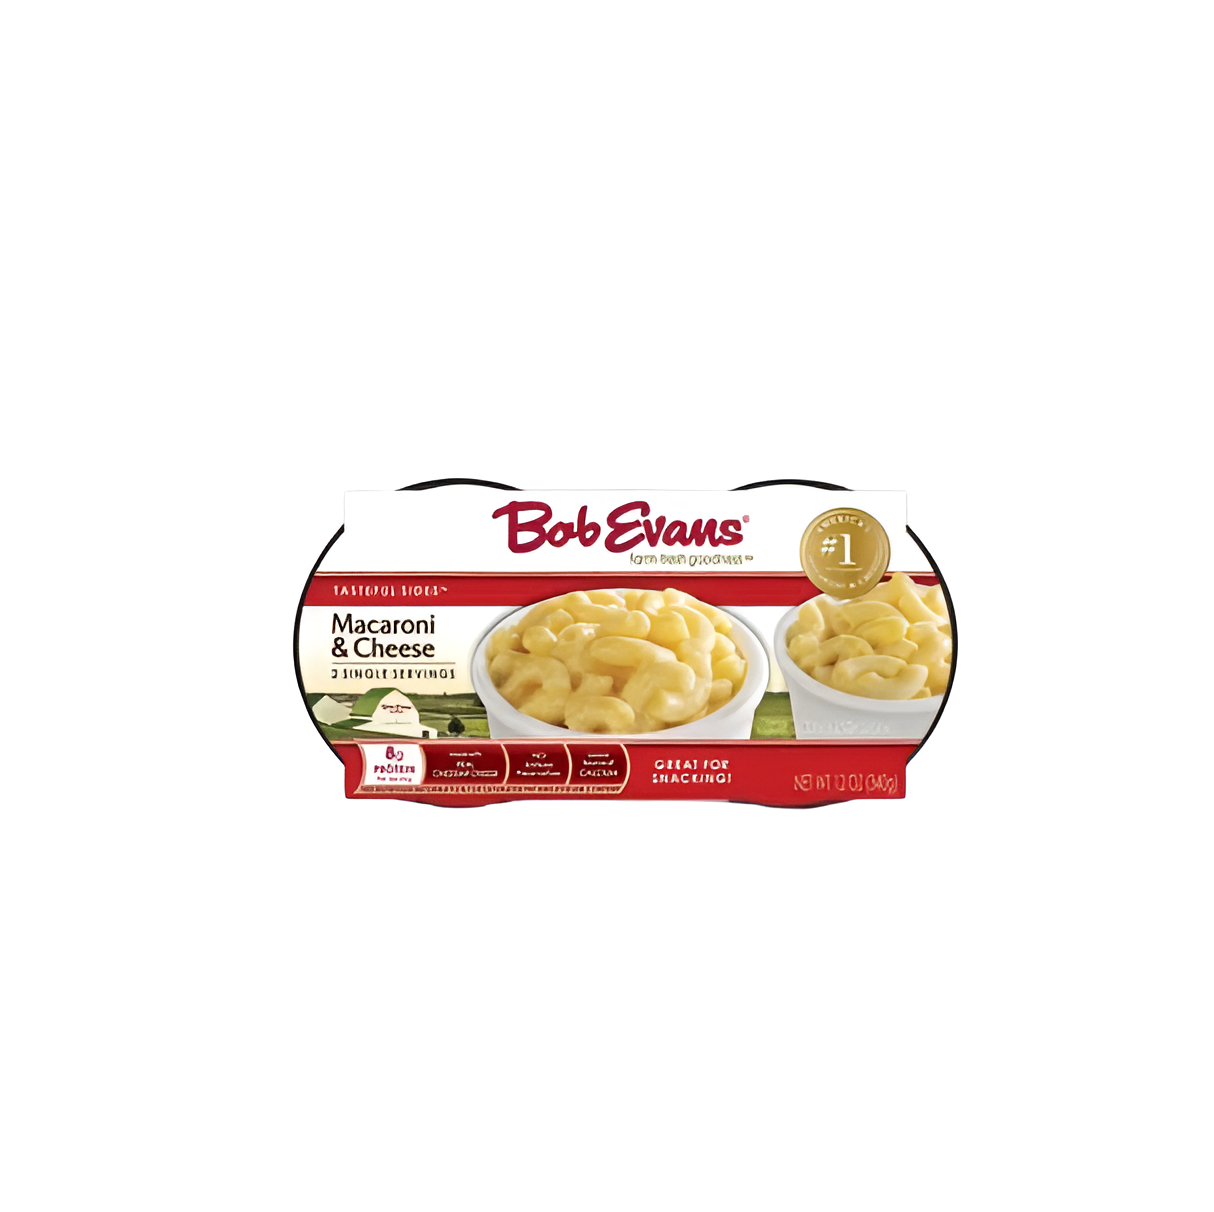 Bob Evans Macaroni & Cheese 2 single serving 12oz (GBE00584)